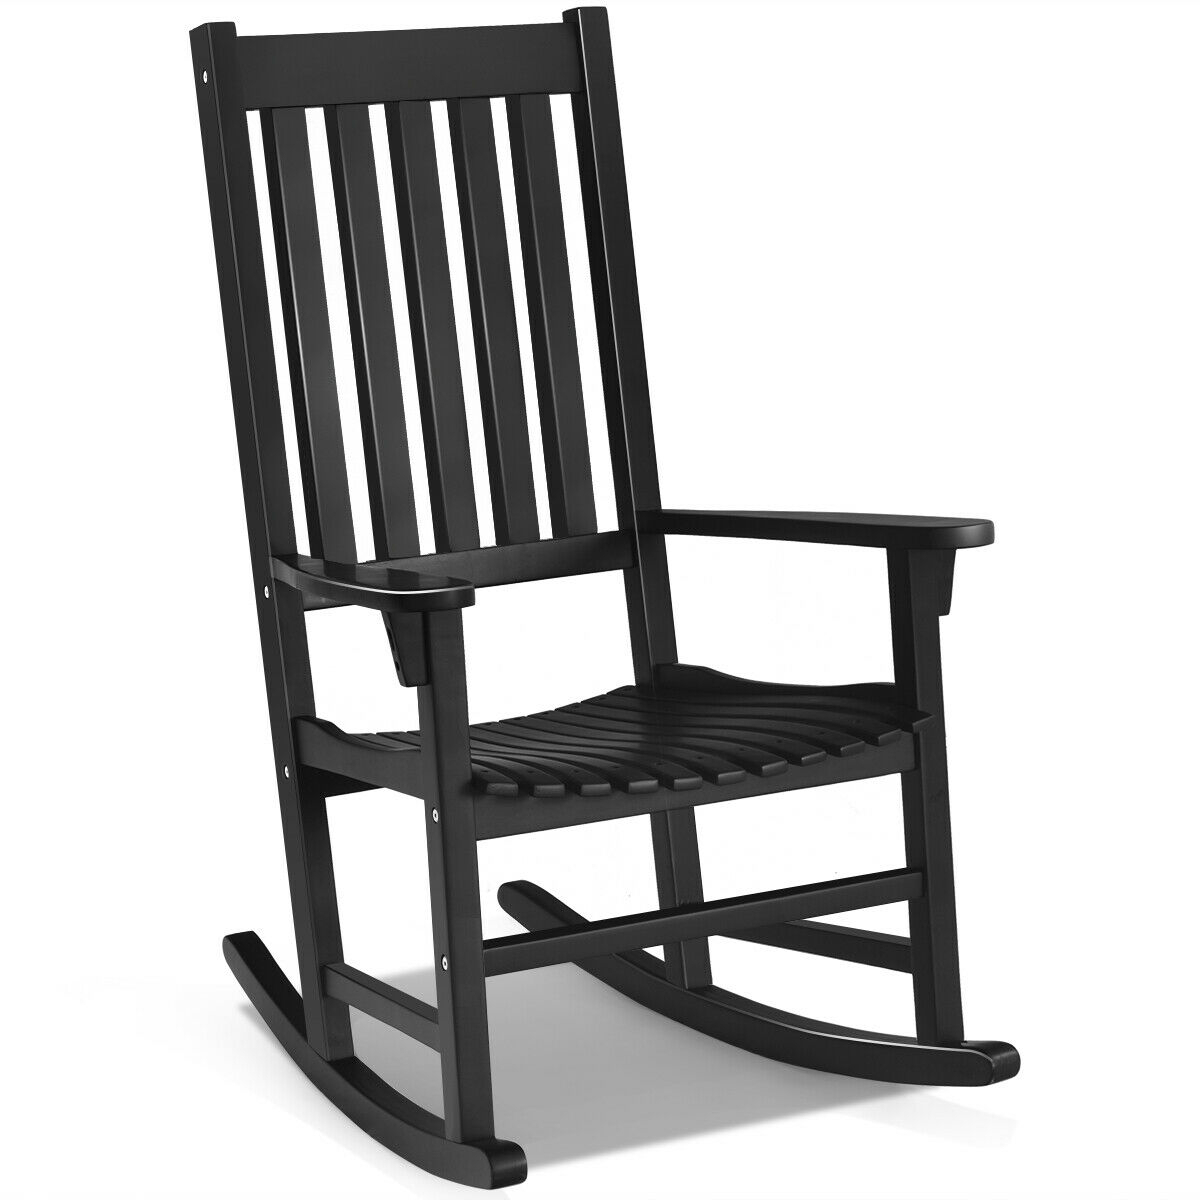 Wooden Rocking Chair Porch Rocker High Back Garden Seat For Indoor Outdoor - Black